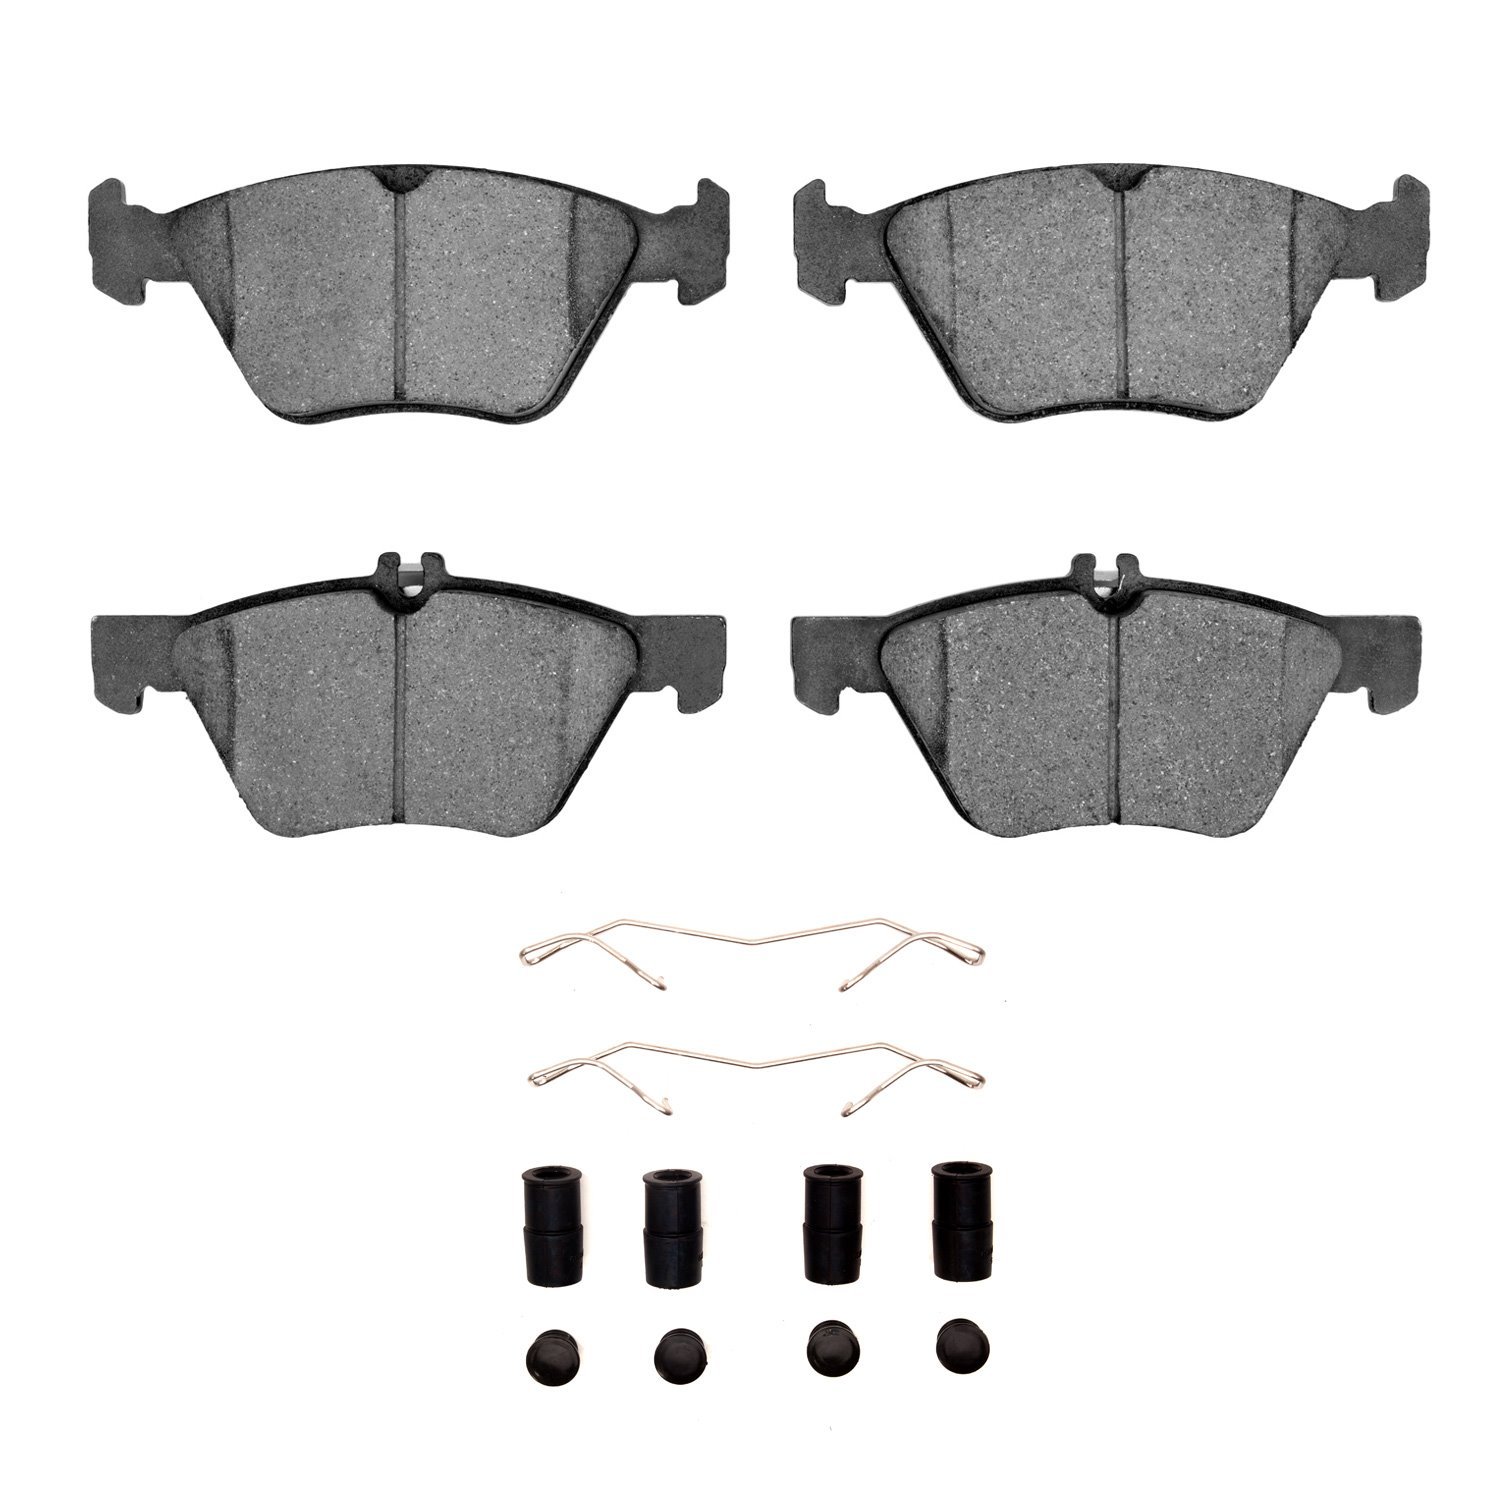 Semi-Metallic Brake Pads & Hardware Kit, 1996-2008 Fits Multiple Makes/Models, Position: Front